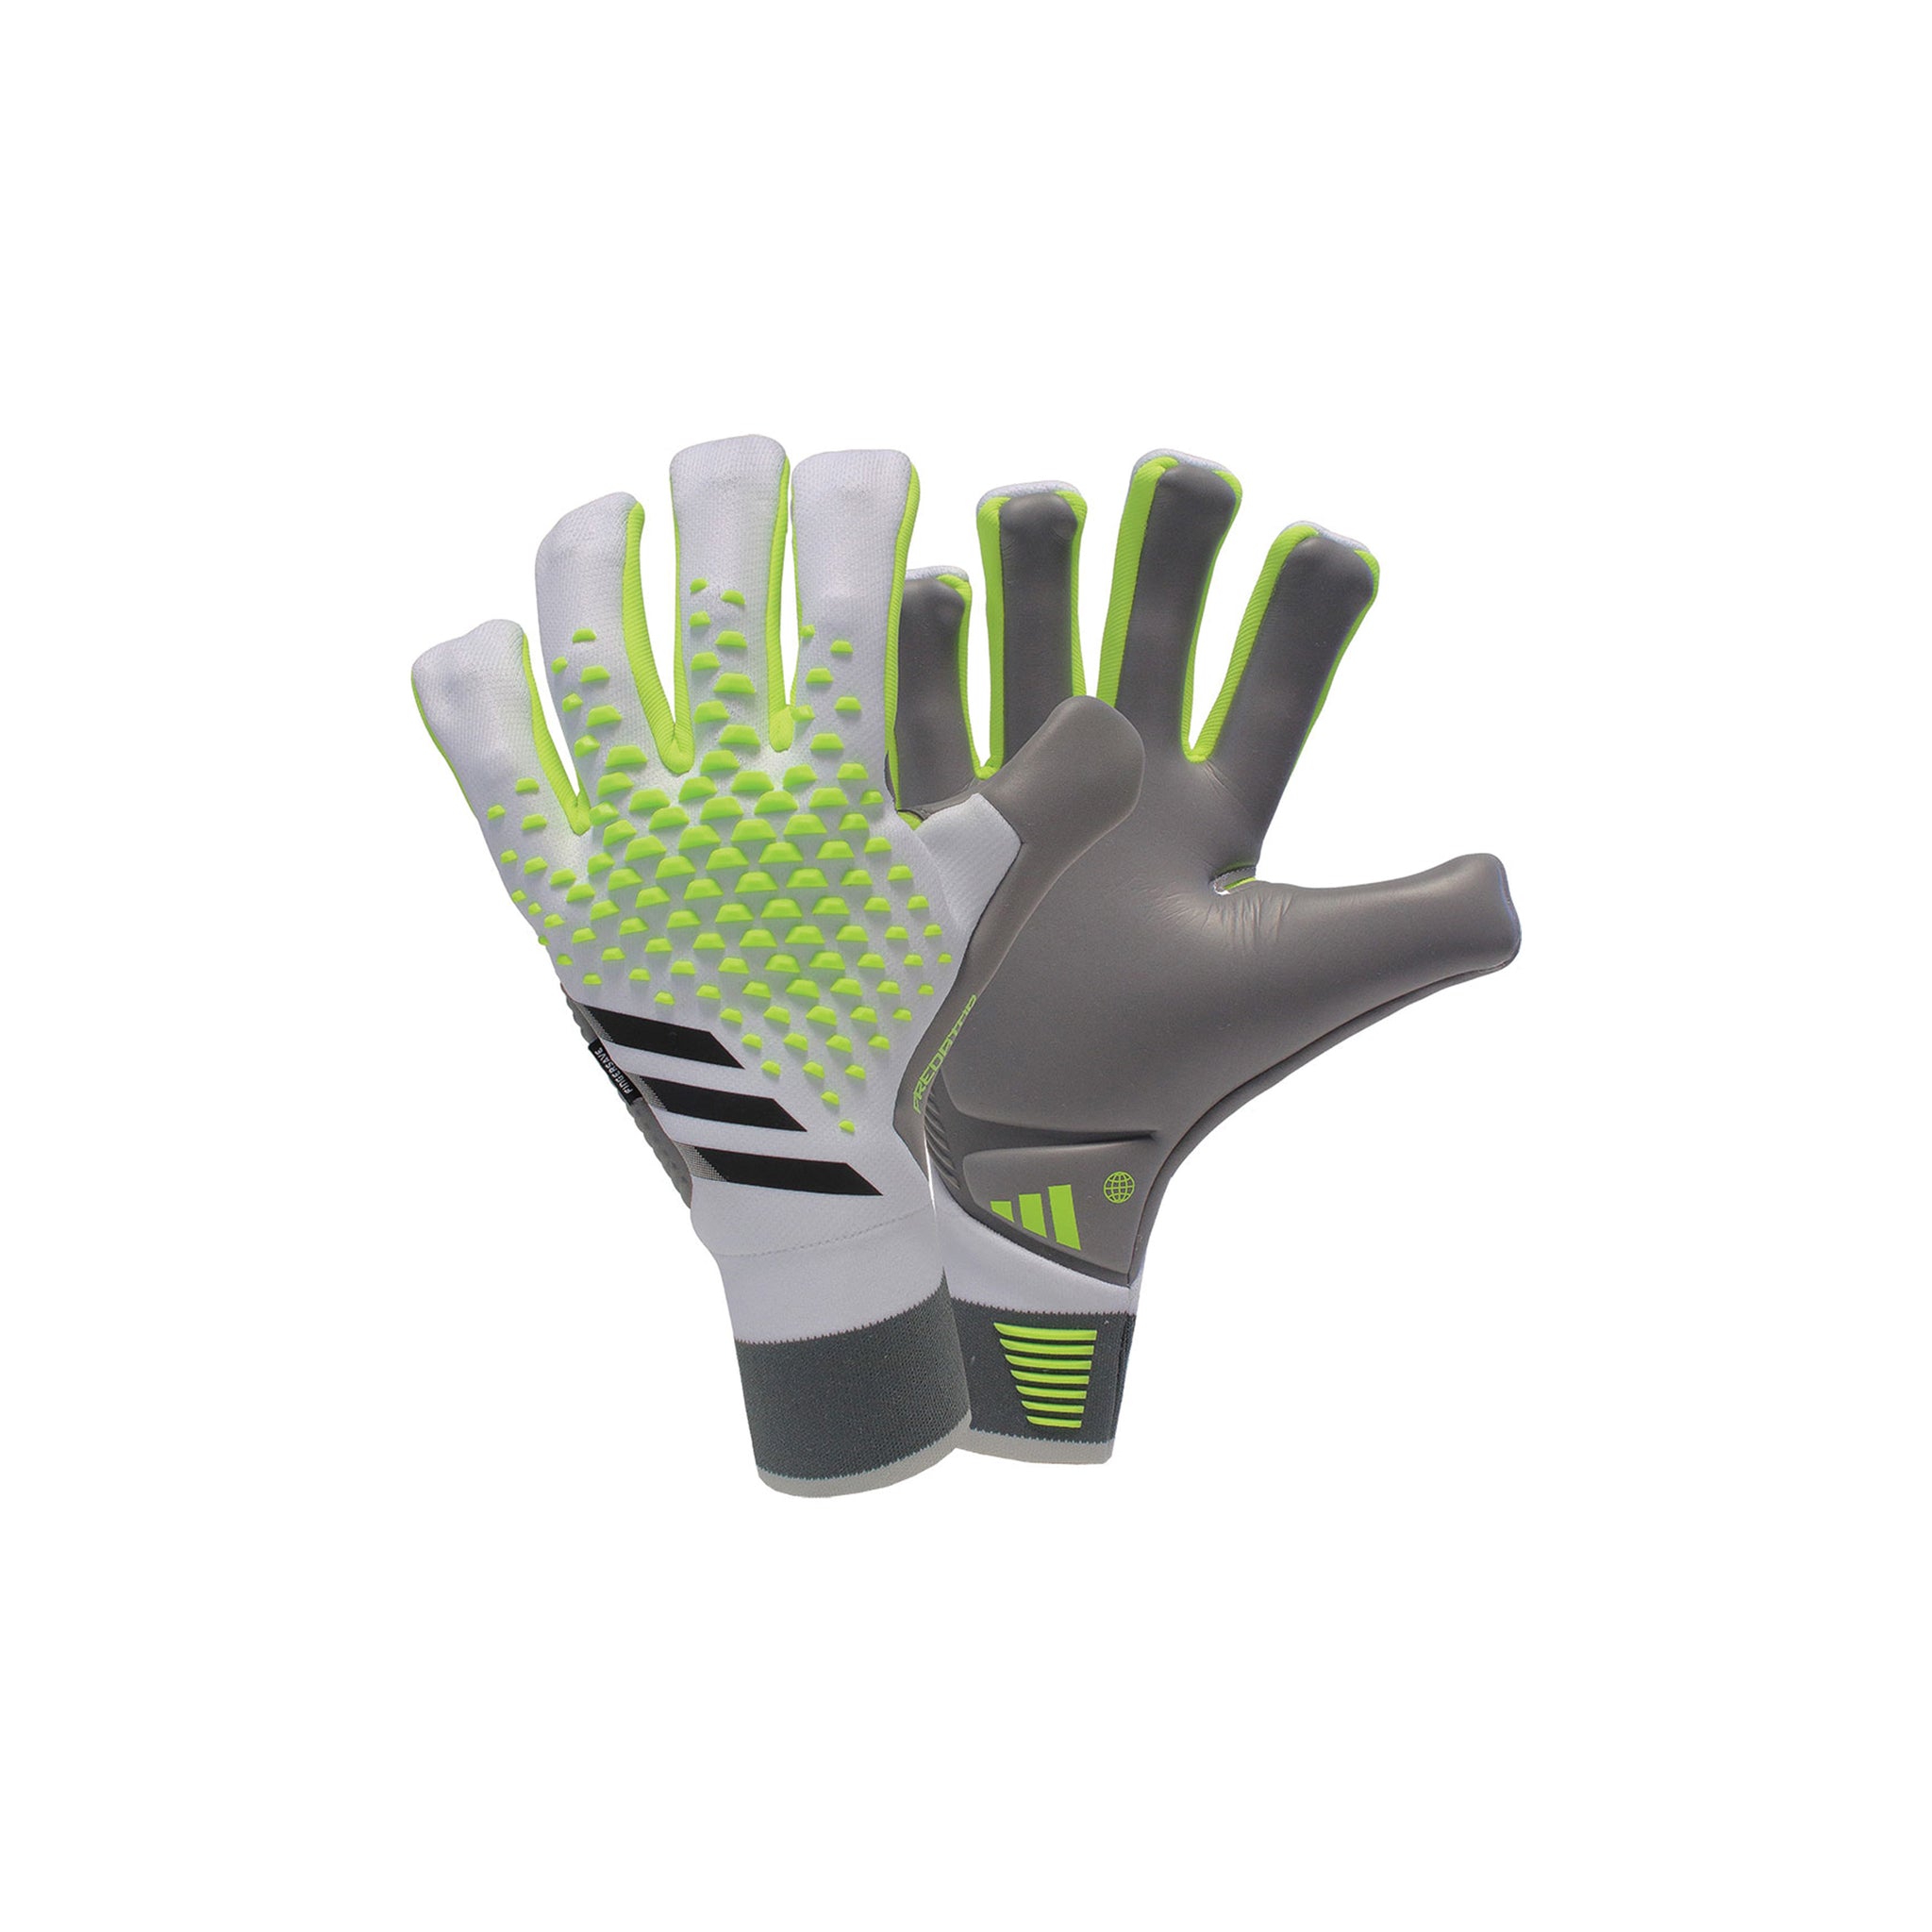 ADIDAS Predator GL Pro FS Gloves